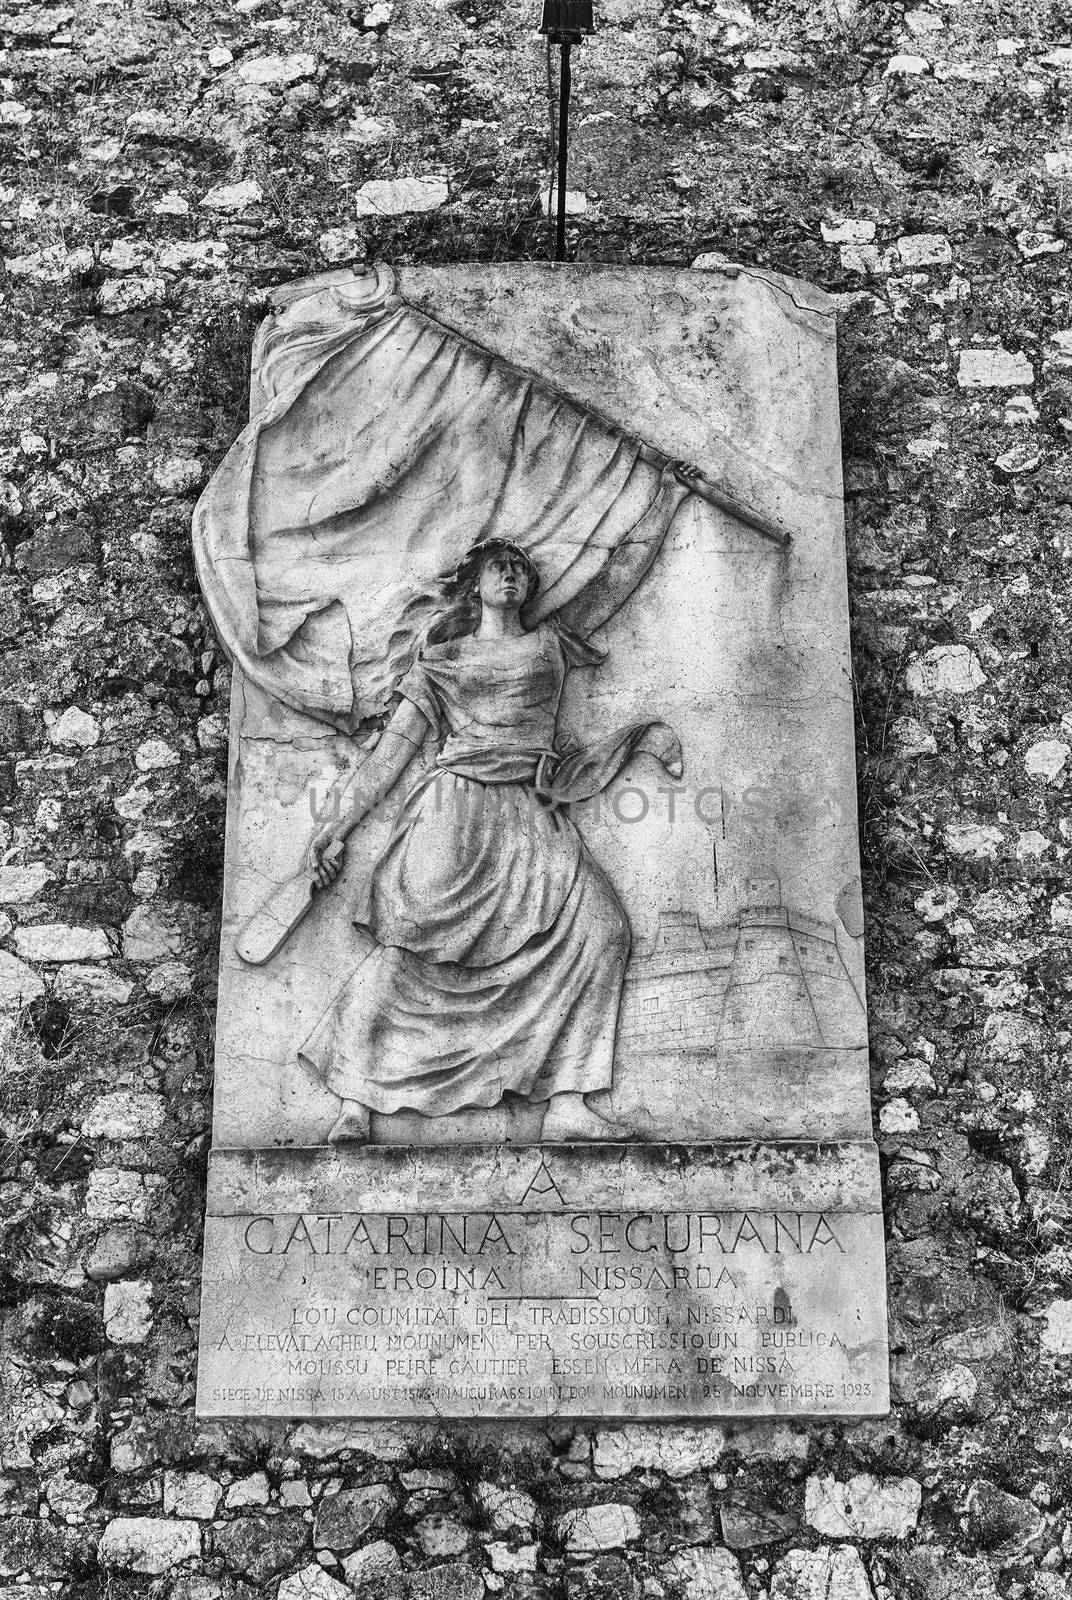 Memorial in bas-relief to Catherine Ségurane, Nice, Cote d'Azur by marcorubino